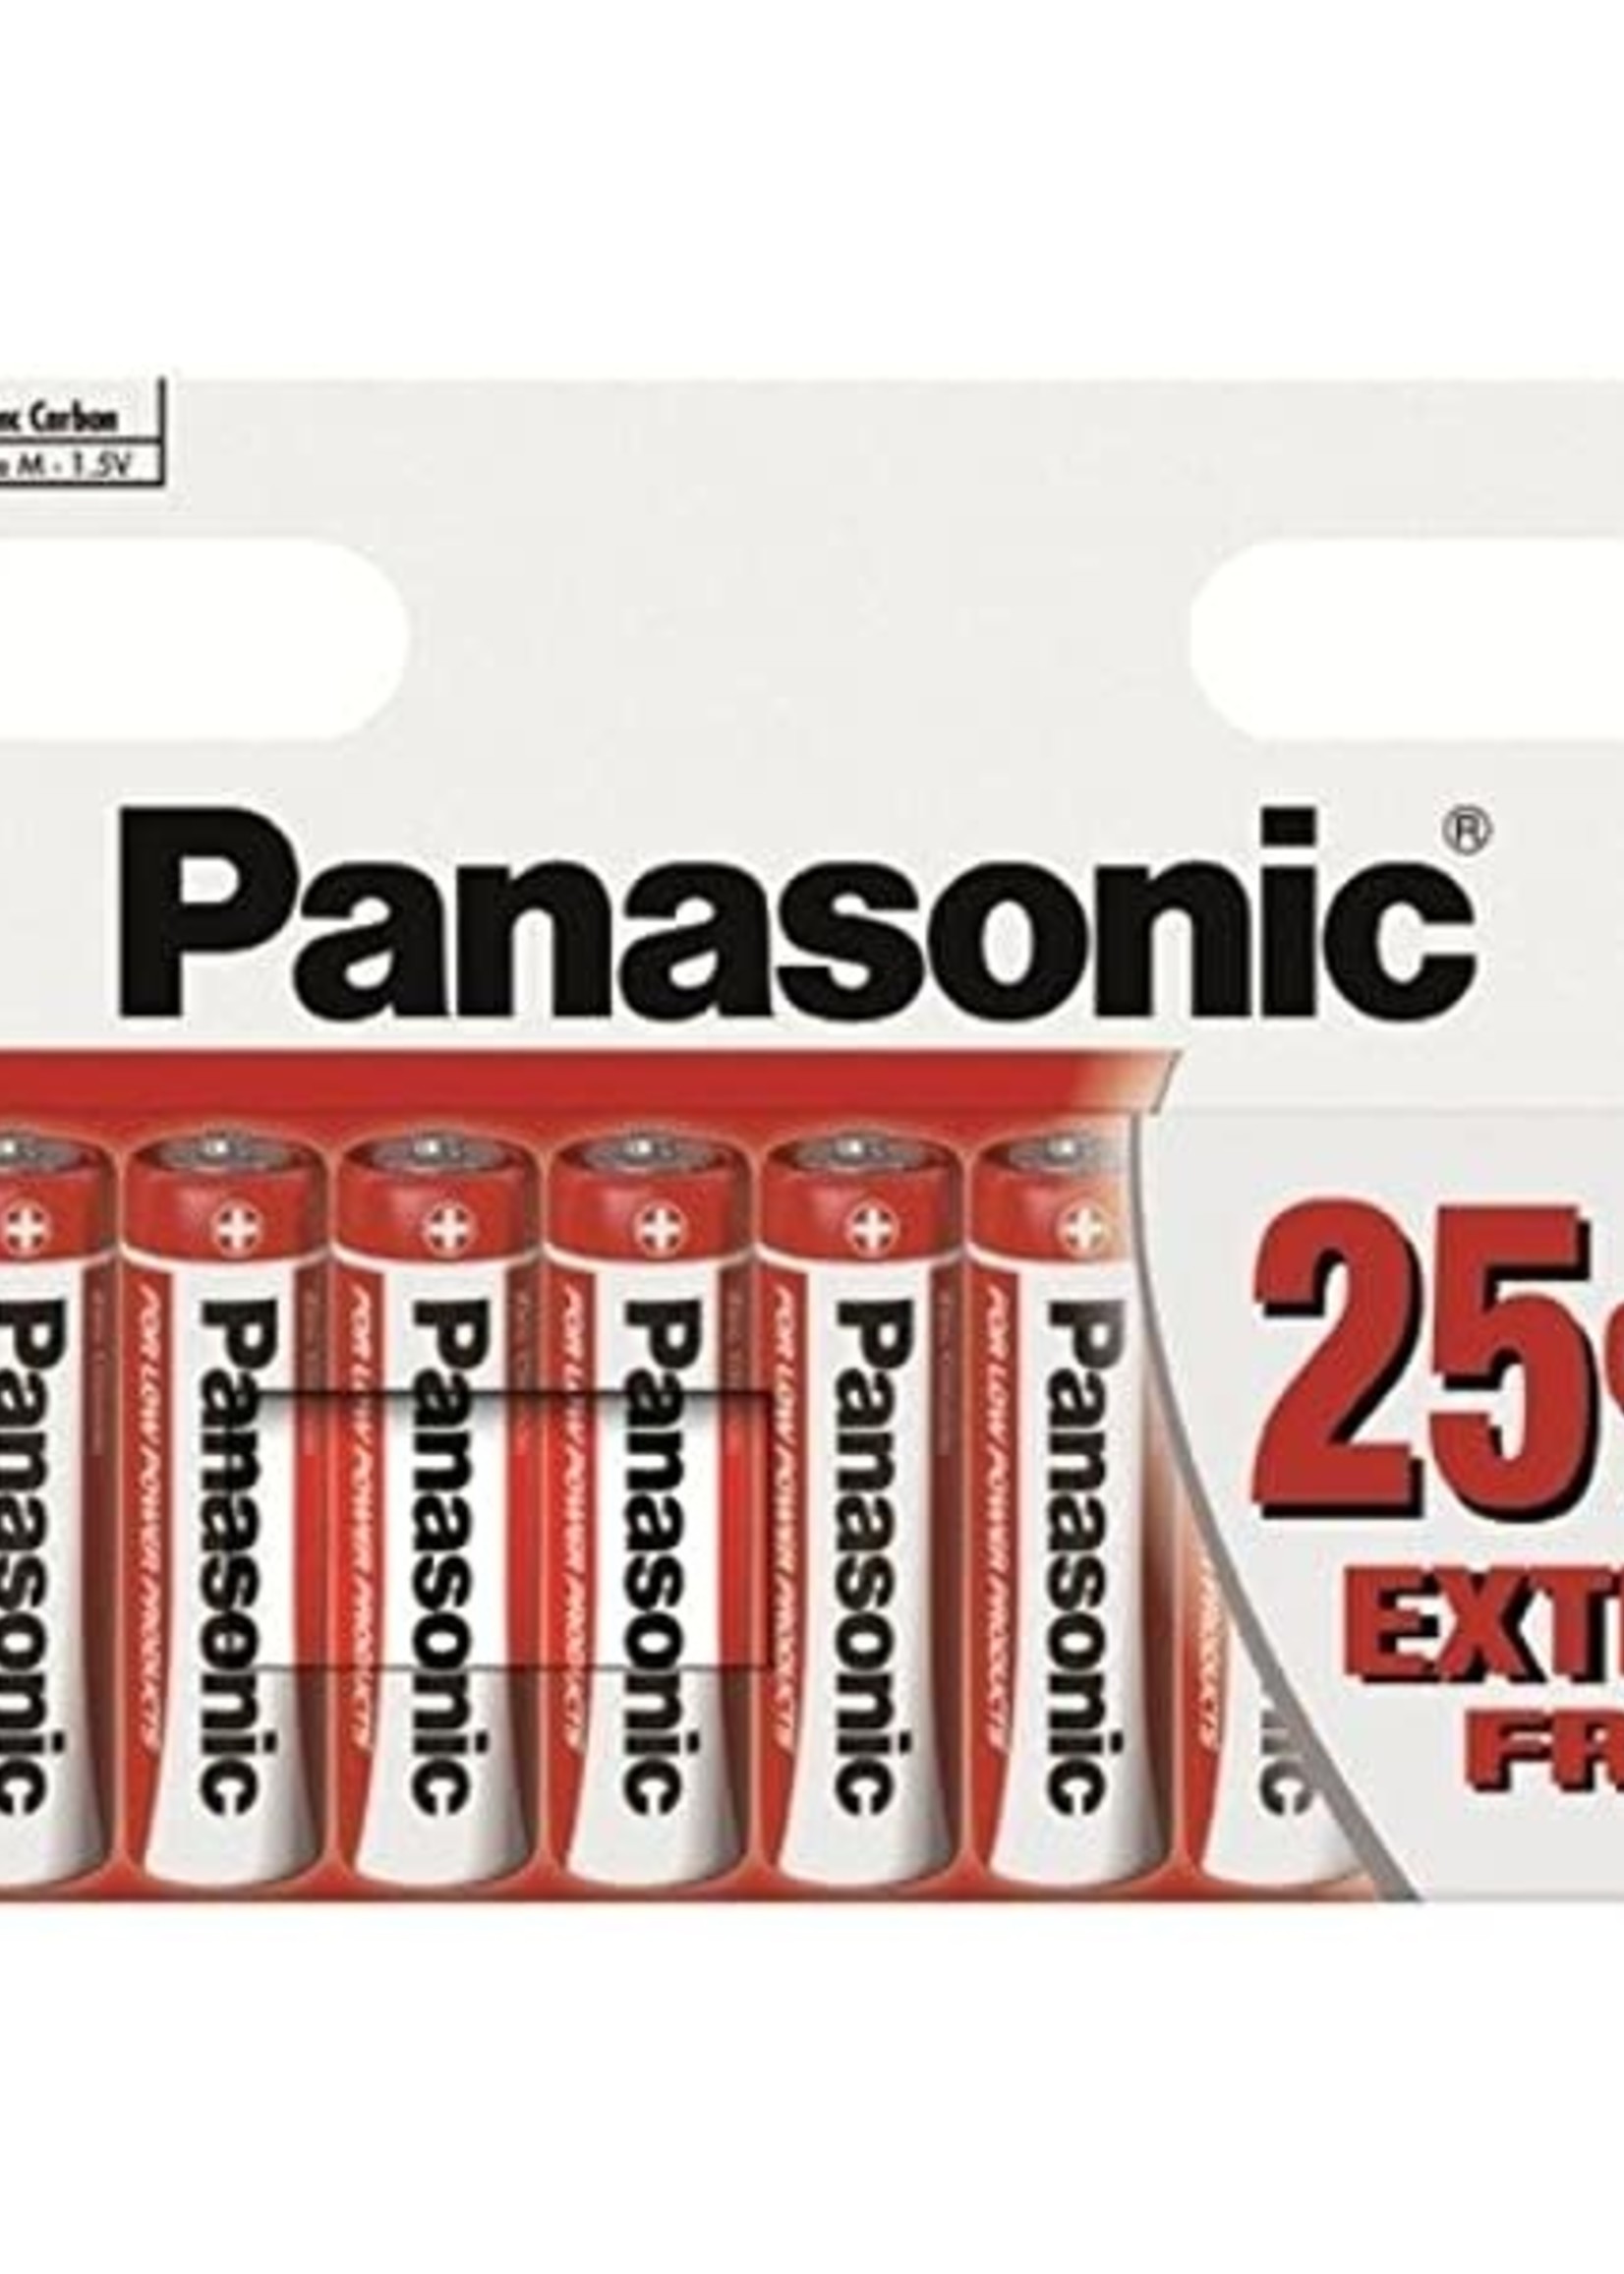 Panasonic Zinc Carbon AAA Batteries (8 Pack + 25% Extra Free)